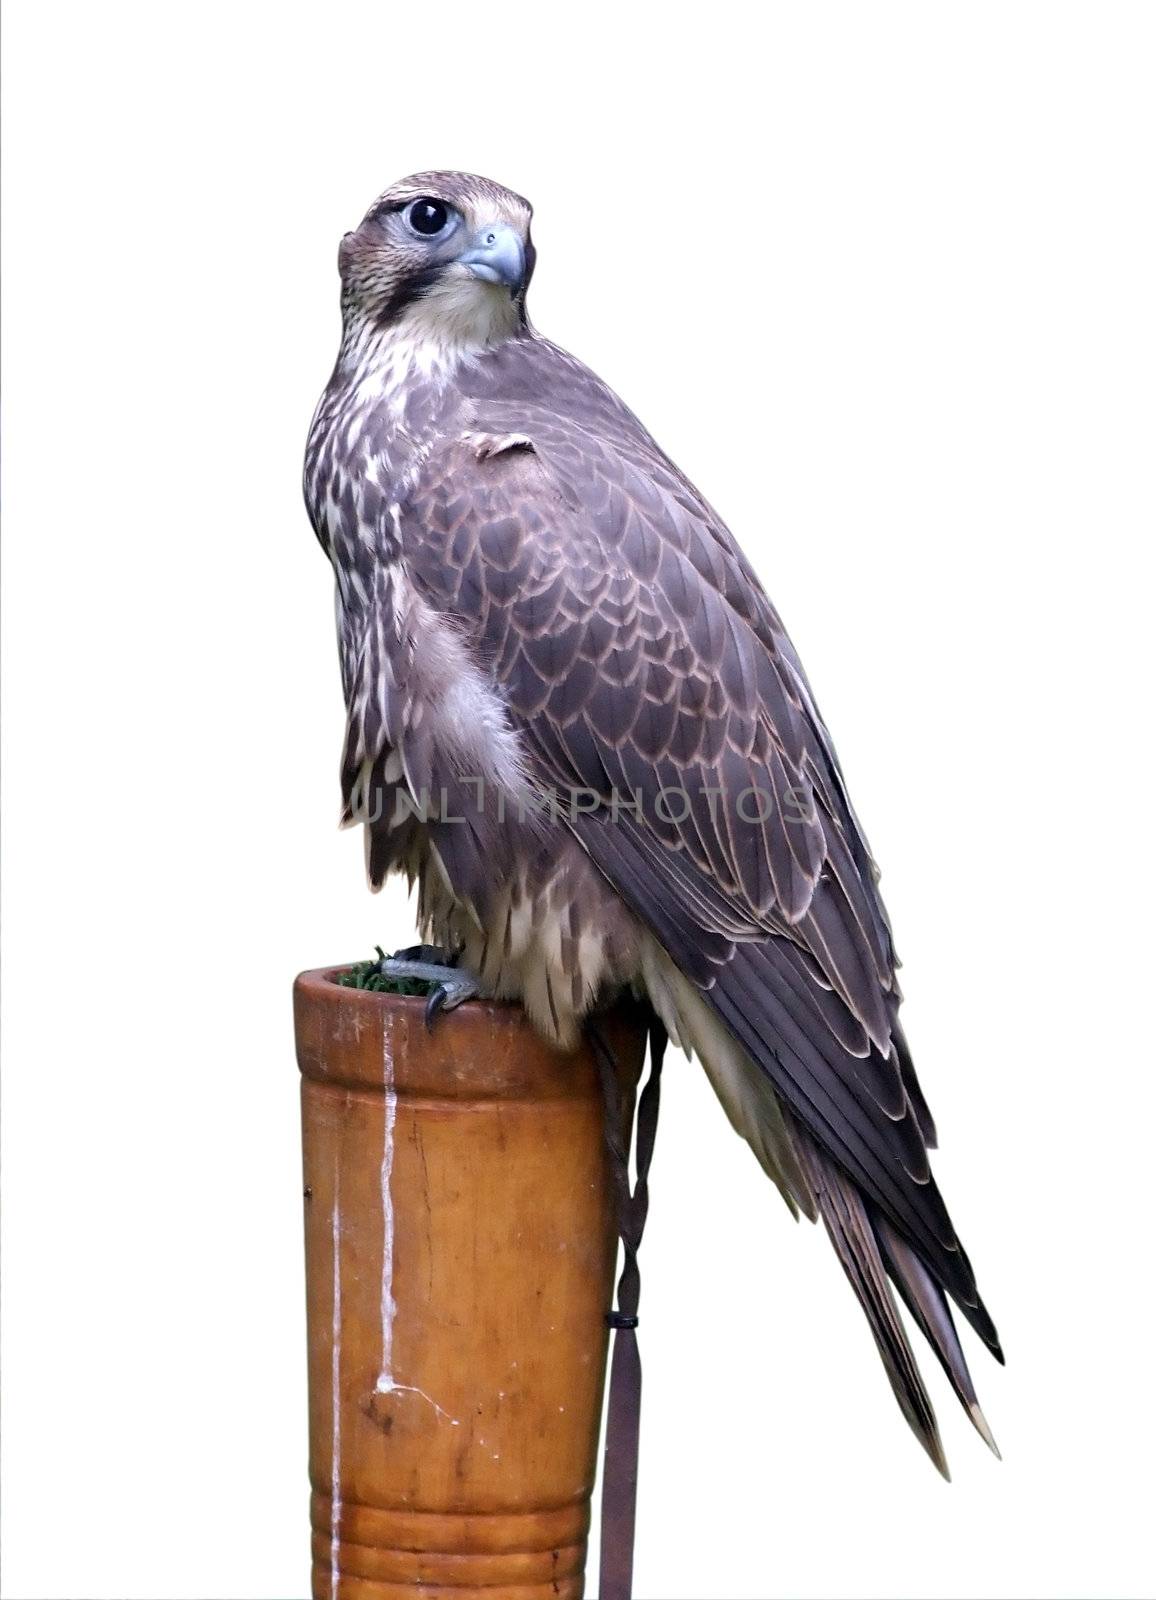 Gray eagle or Harpyhaliaetus coronatus by PauloResende